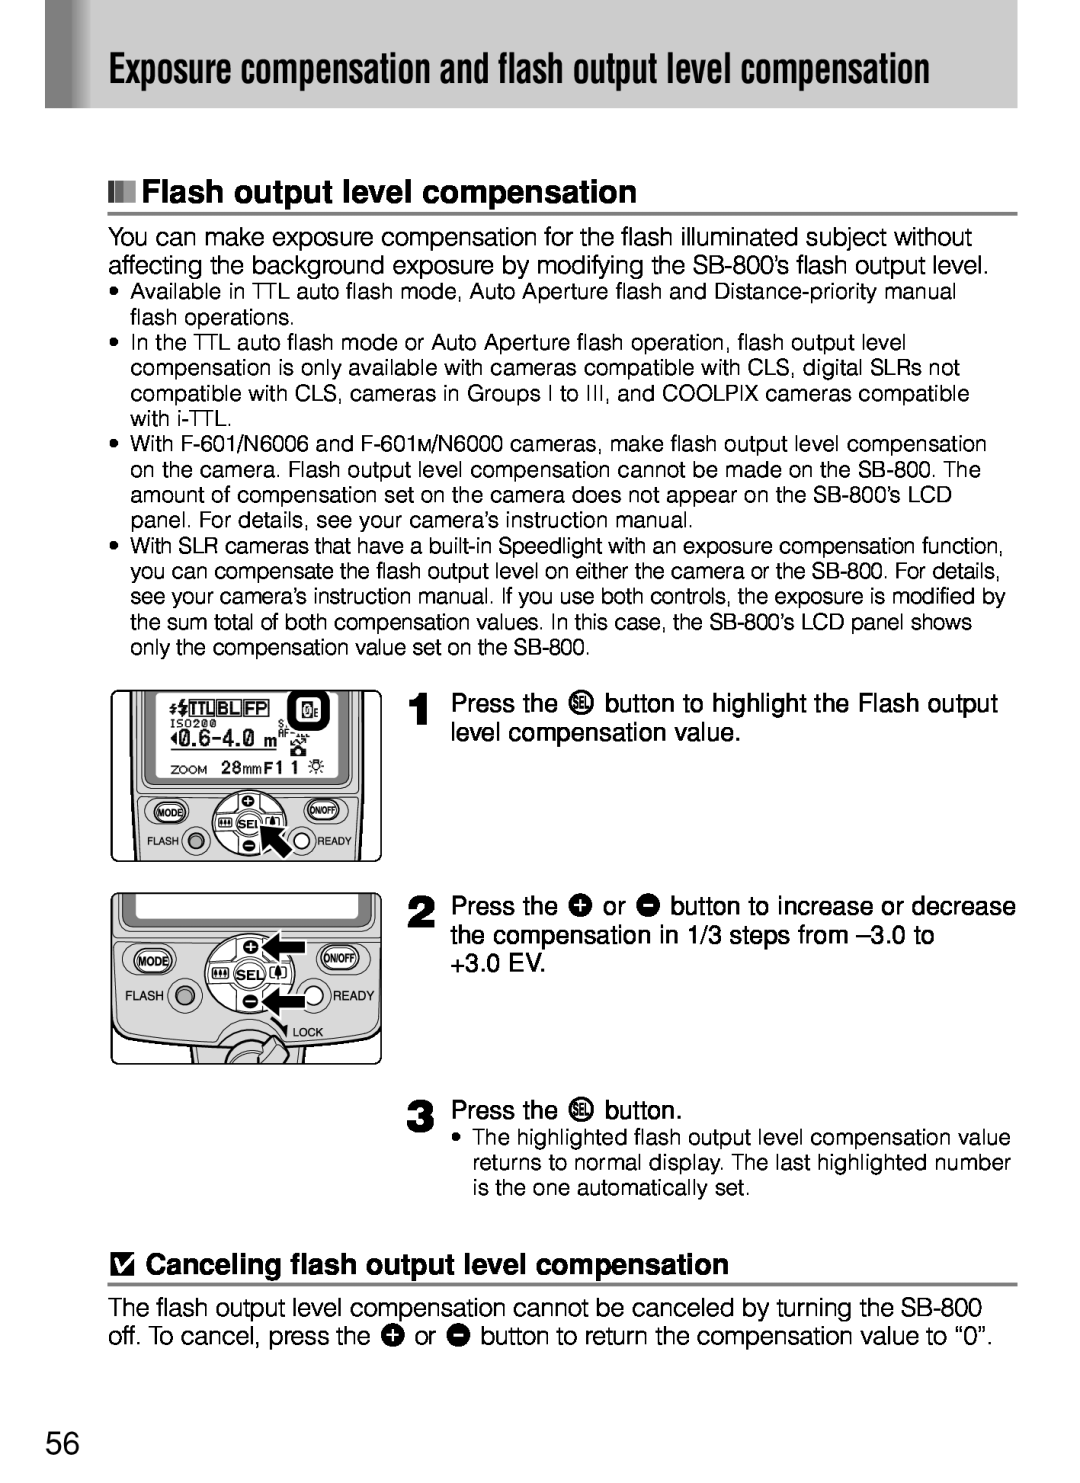 Nikon SB-800 instruction manual Exposure compensation and flash output level compensation, Flash output level compensation 